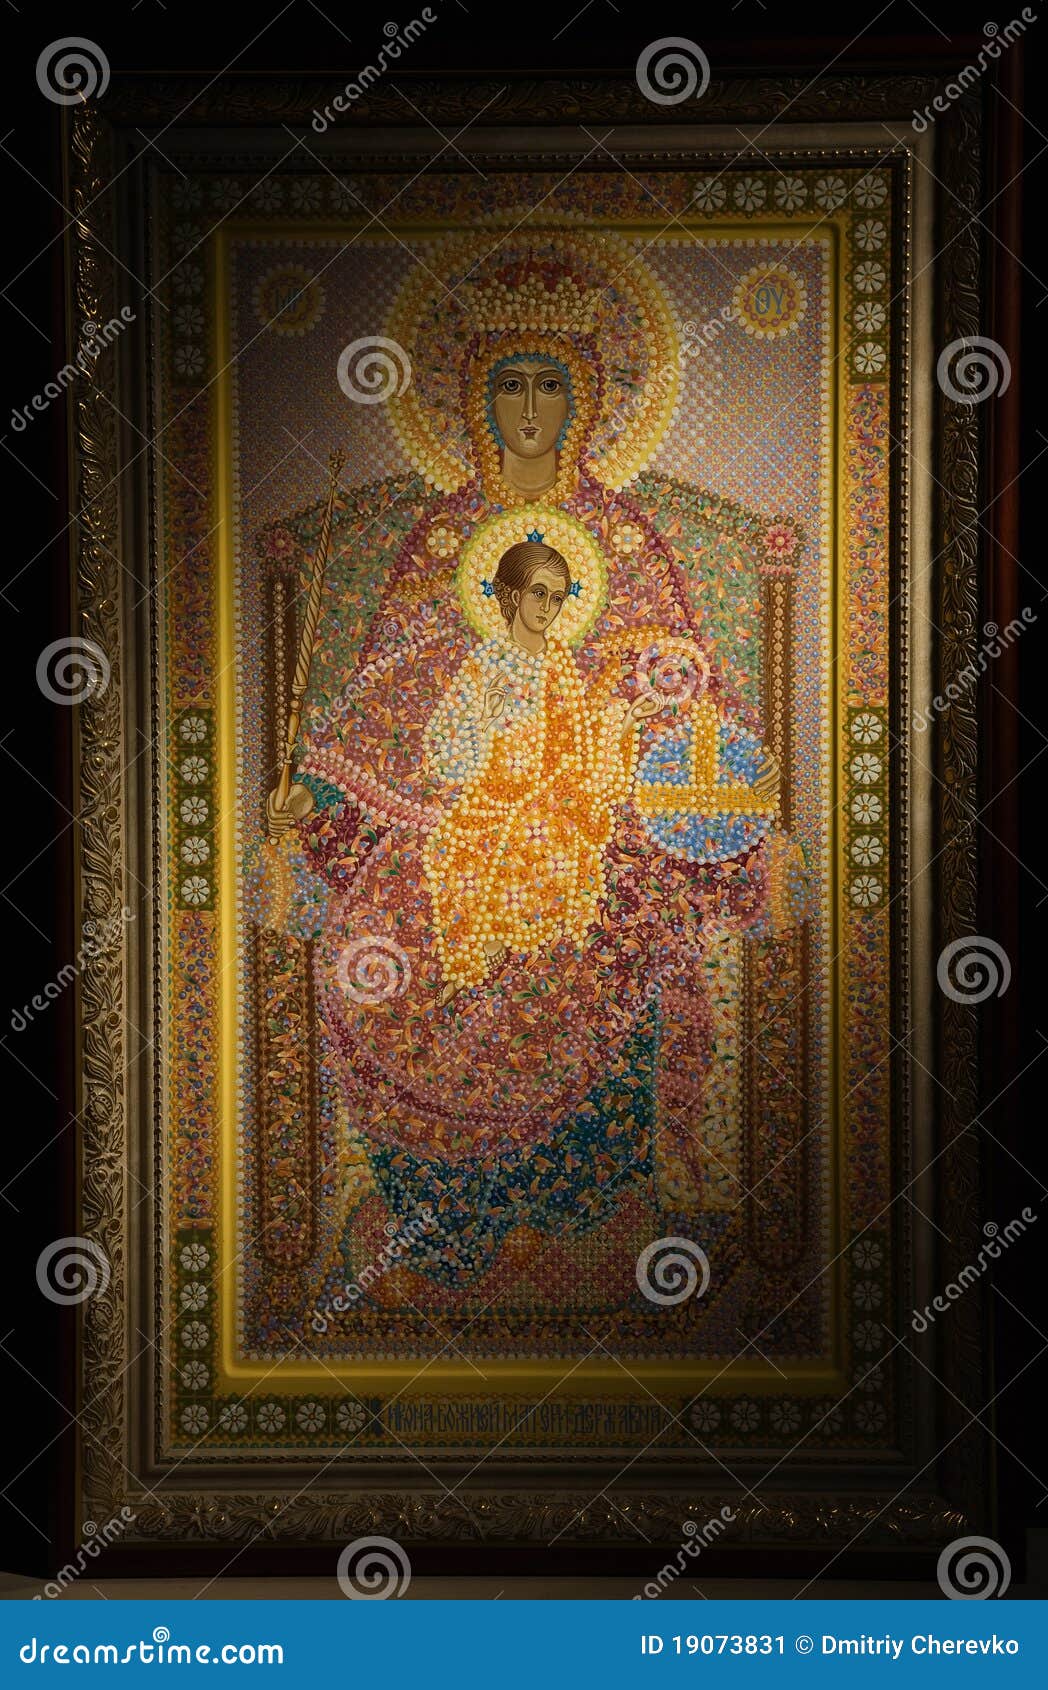 russian orthodoxy icon over black